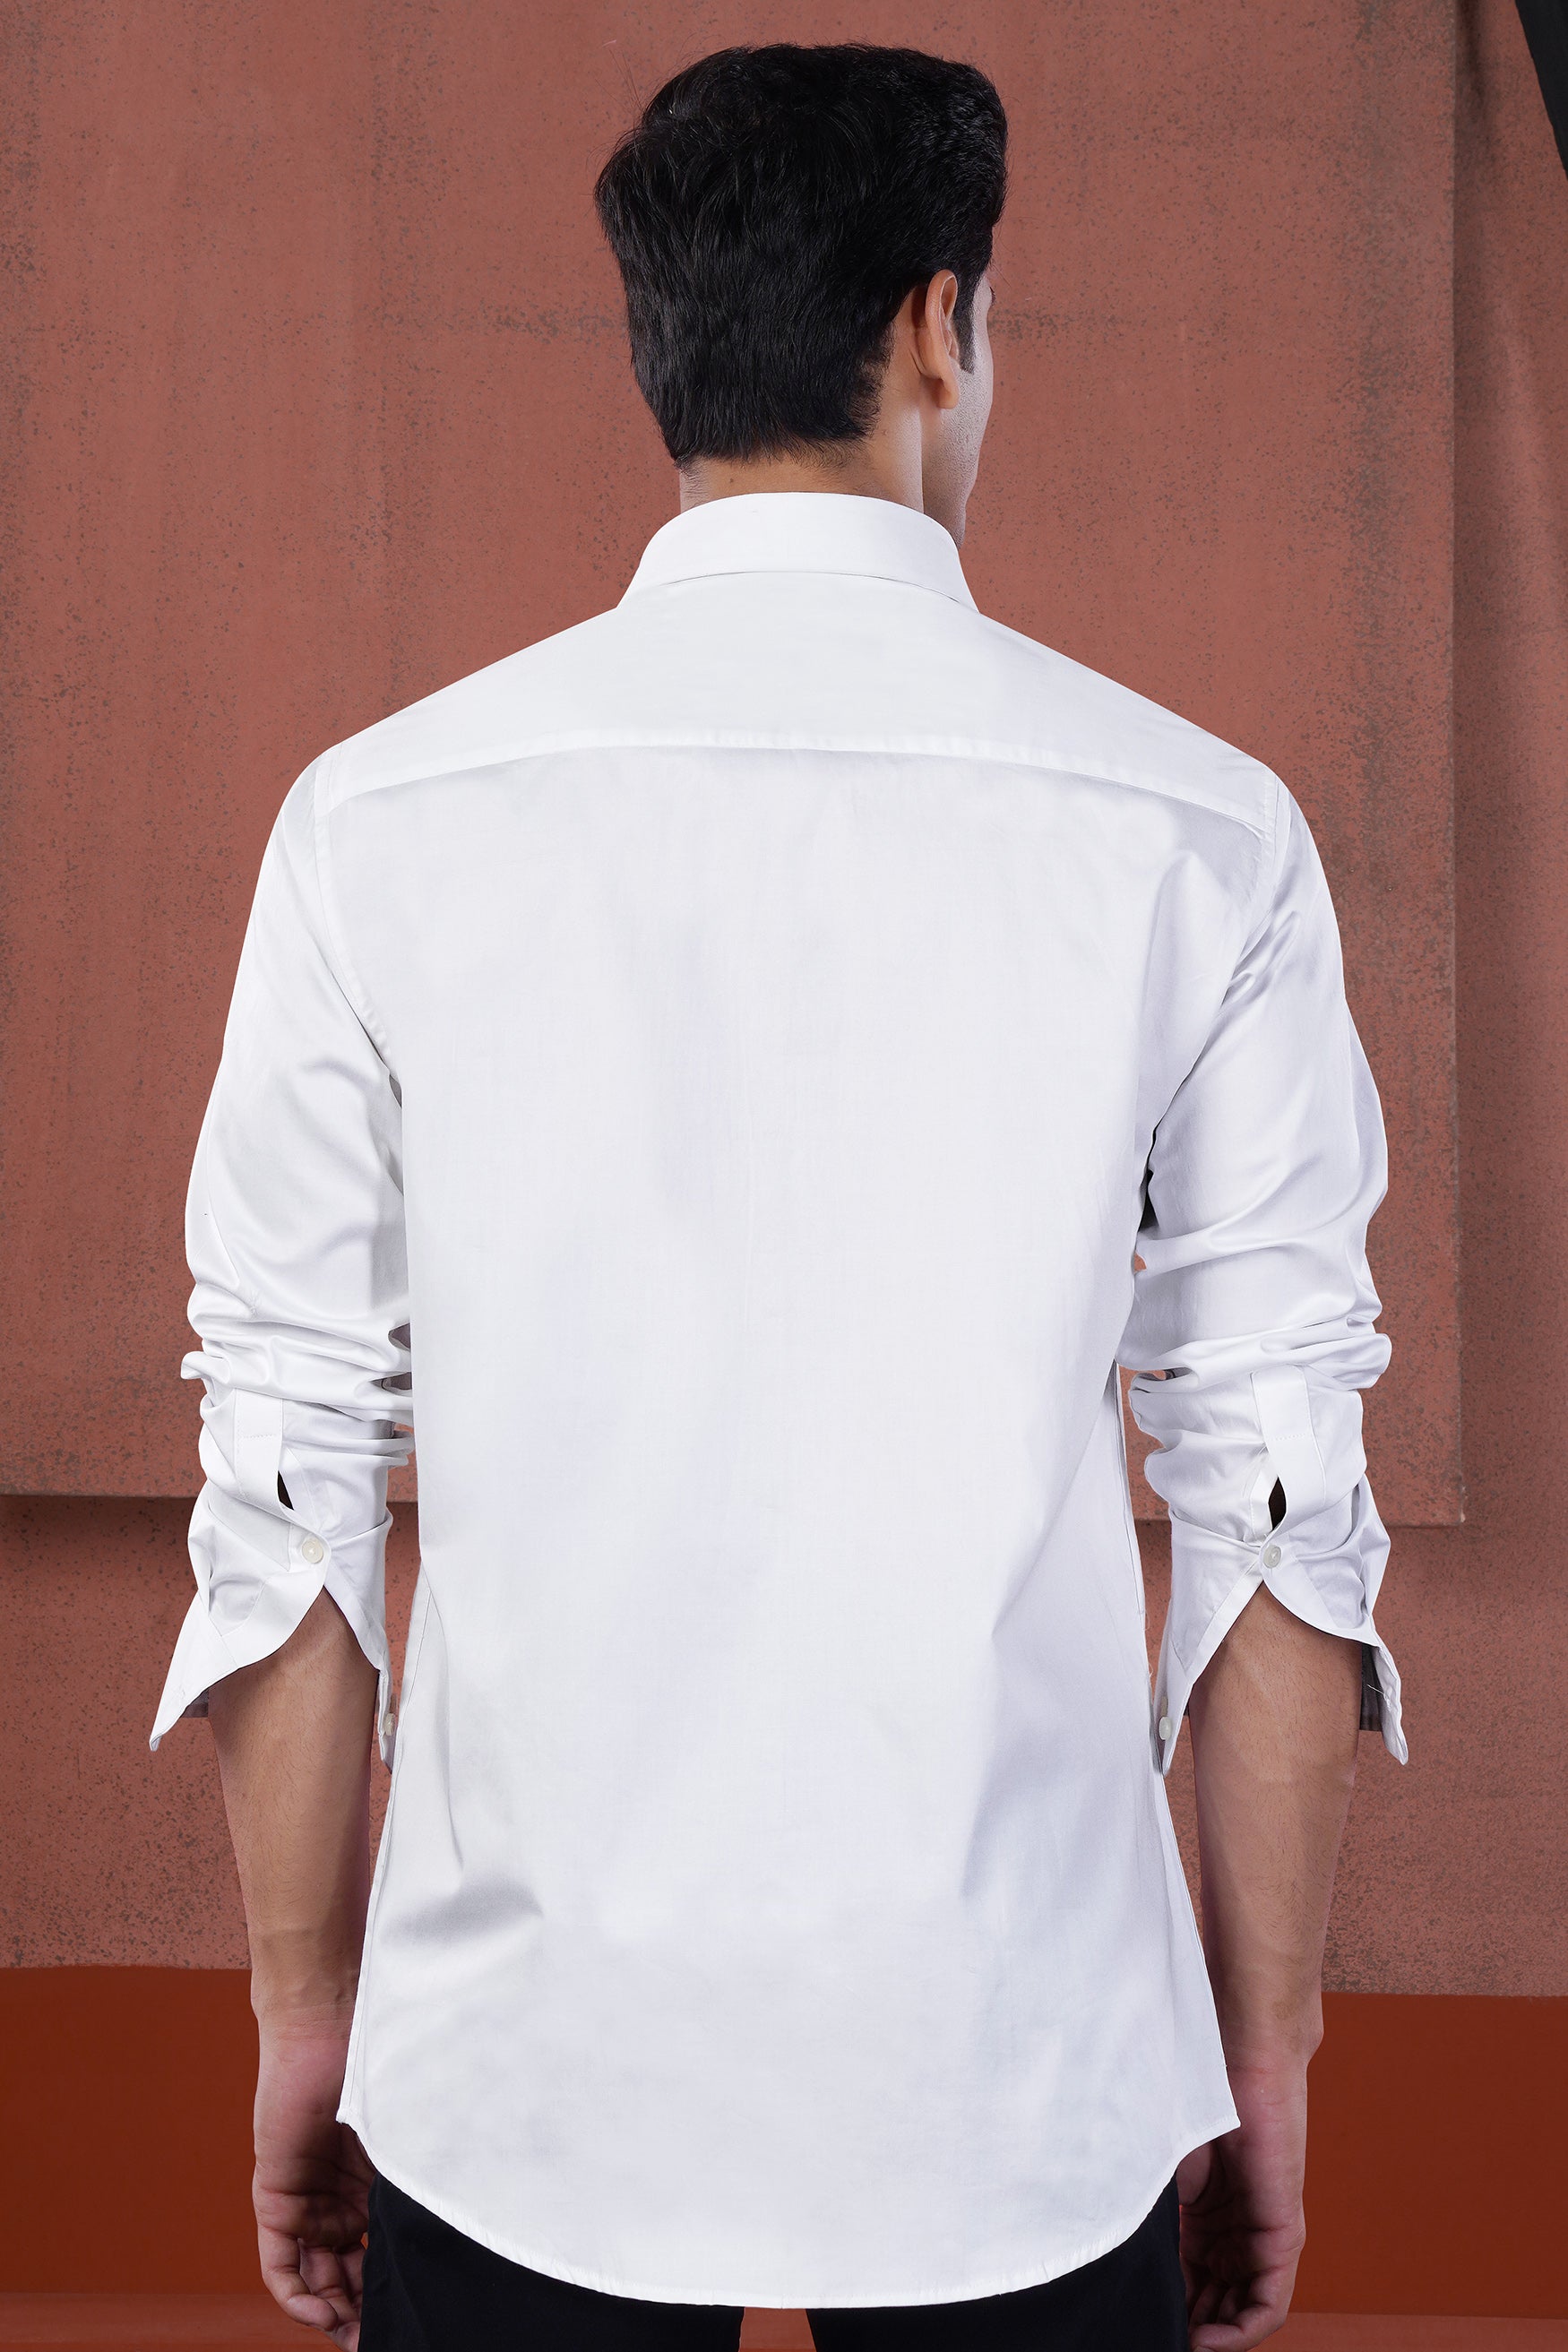 Bright White French Crown Elements Embroidered Premium Cotton Designer Shirt